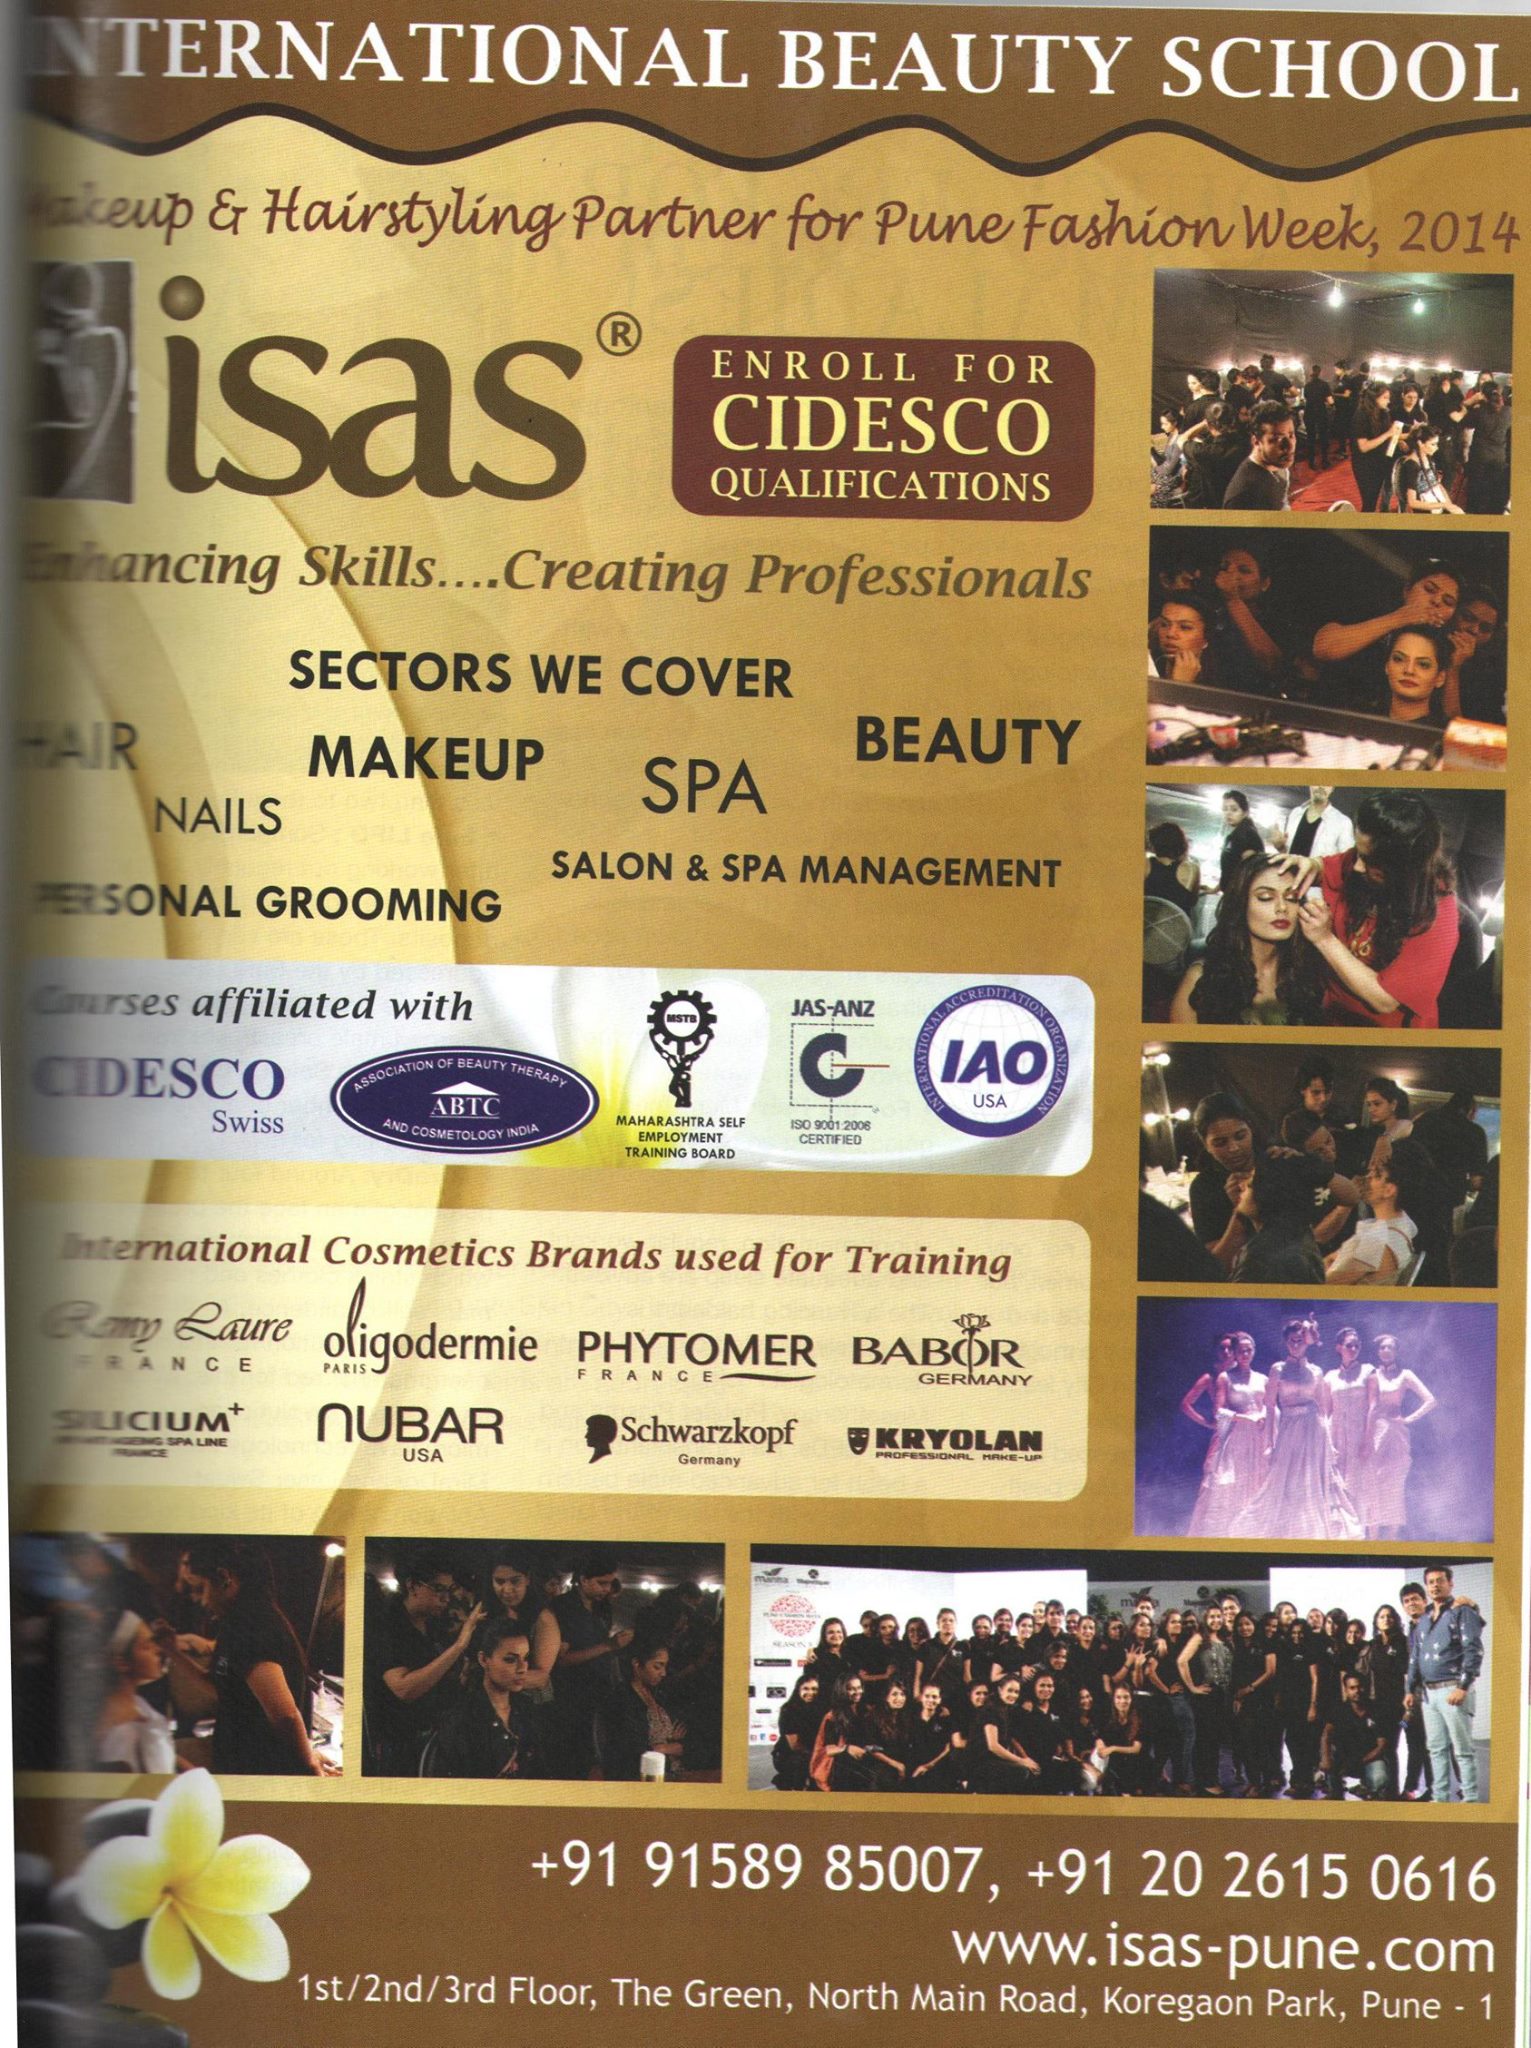 ISAS, International Beauty School in Femina Feb 2015...!